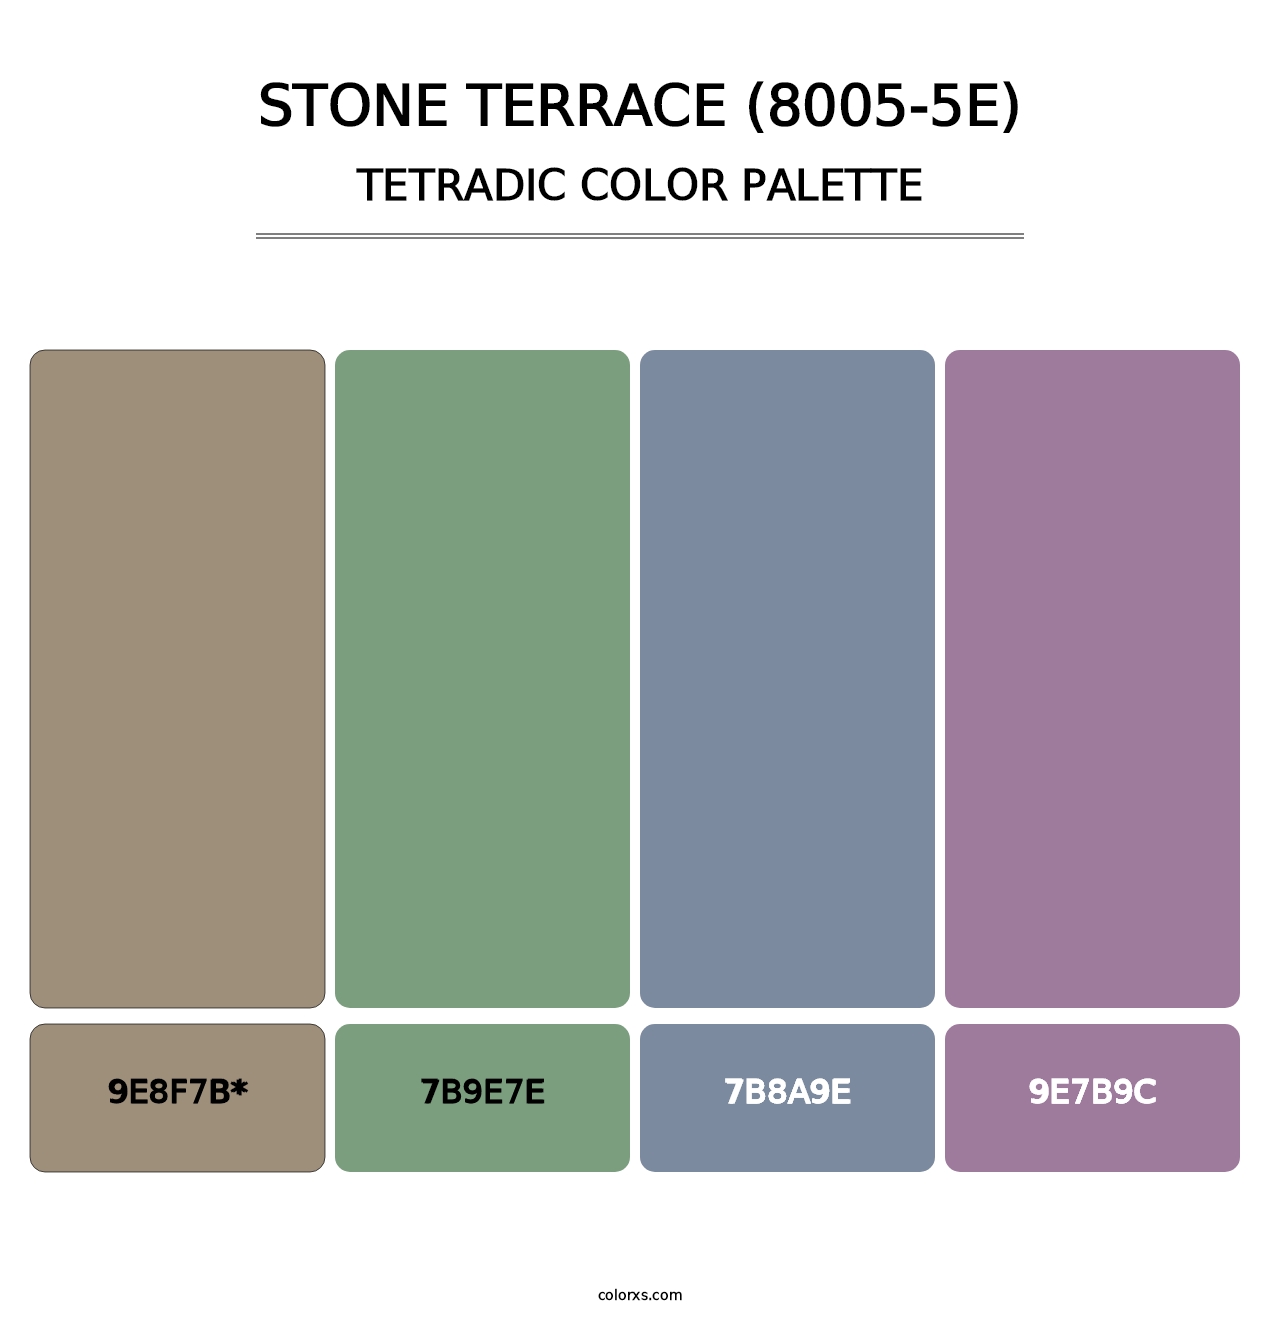 Stone Terrace (8005-5E) - Tetradic Color Palette